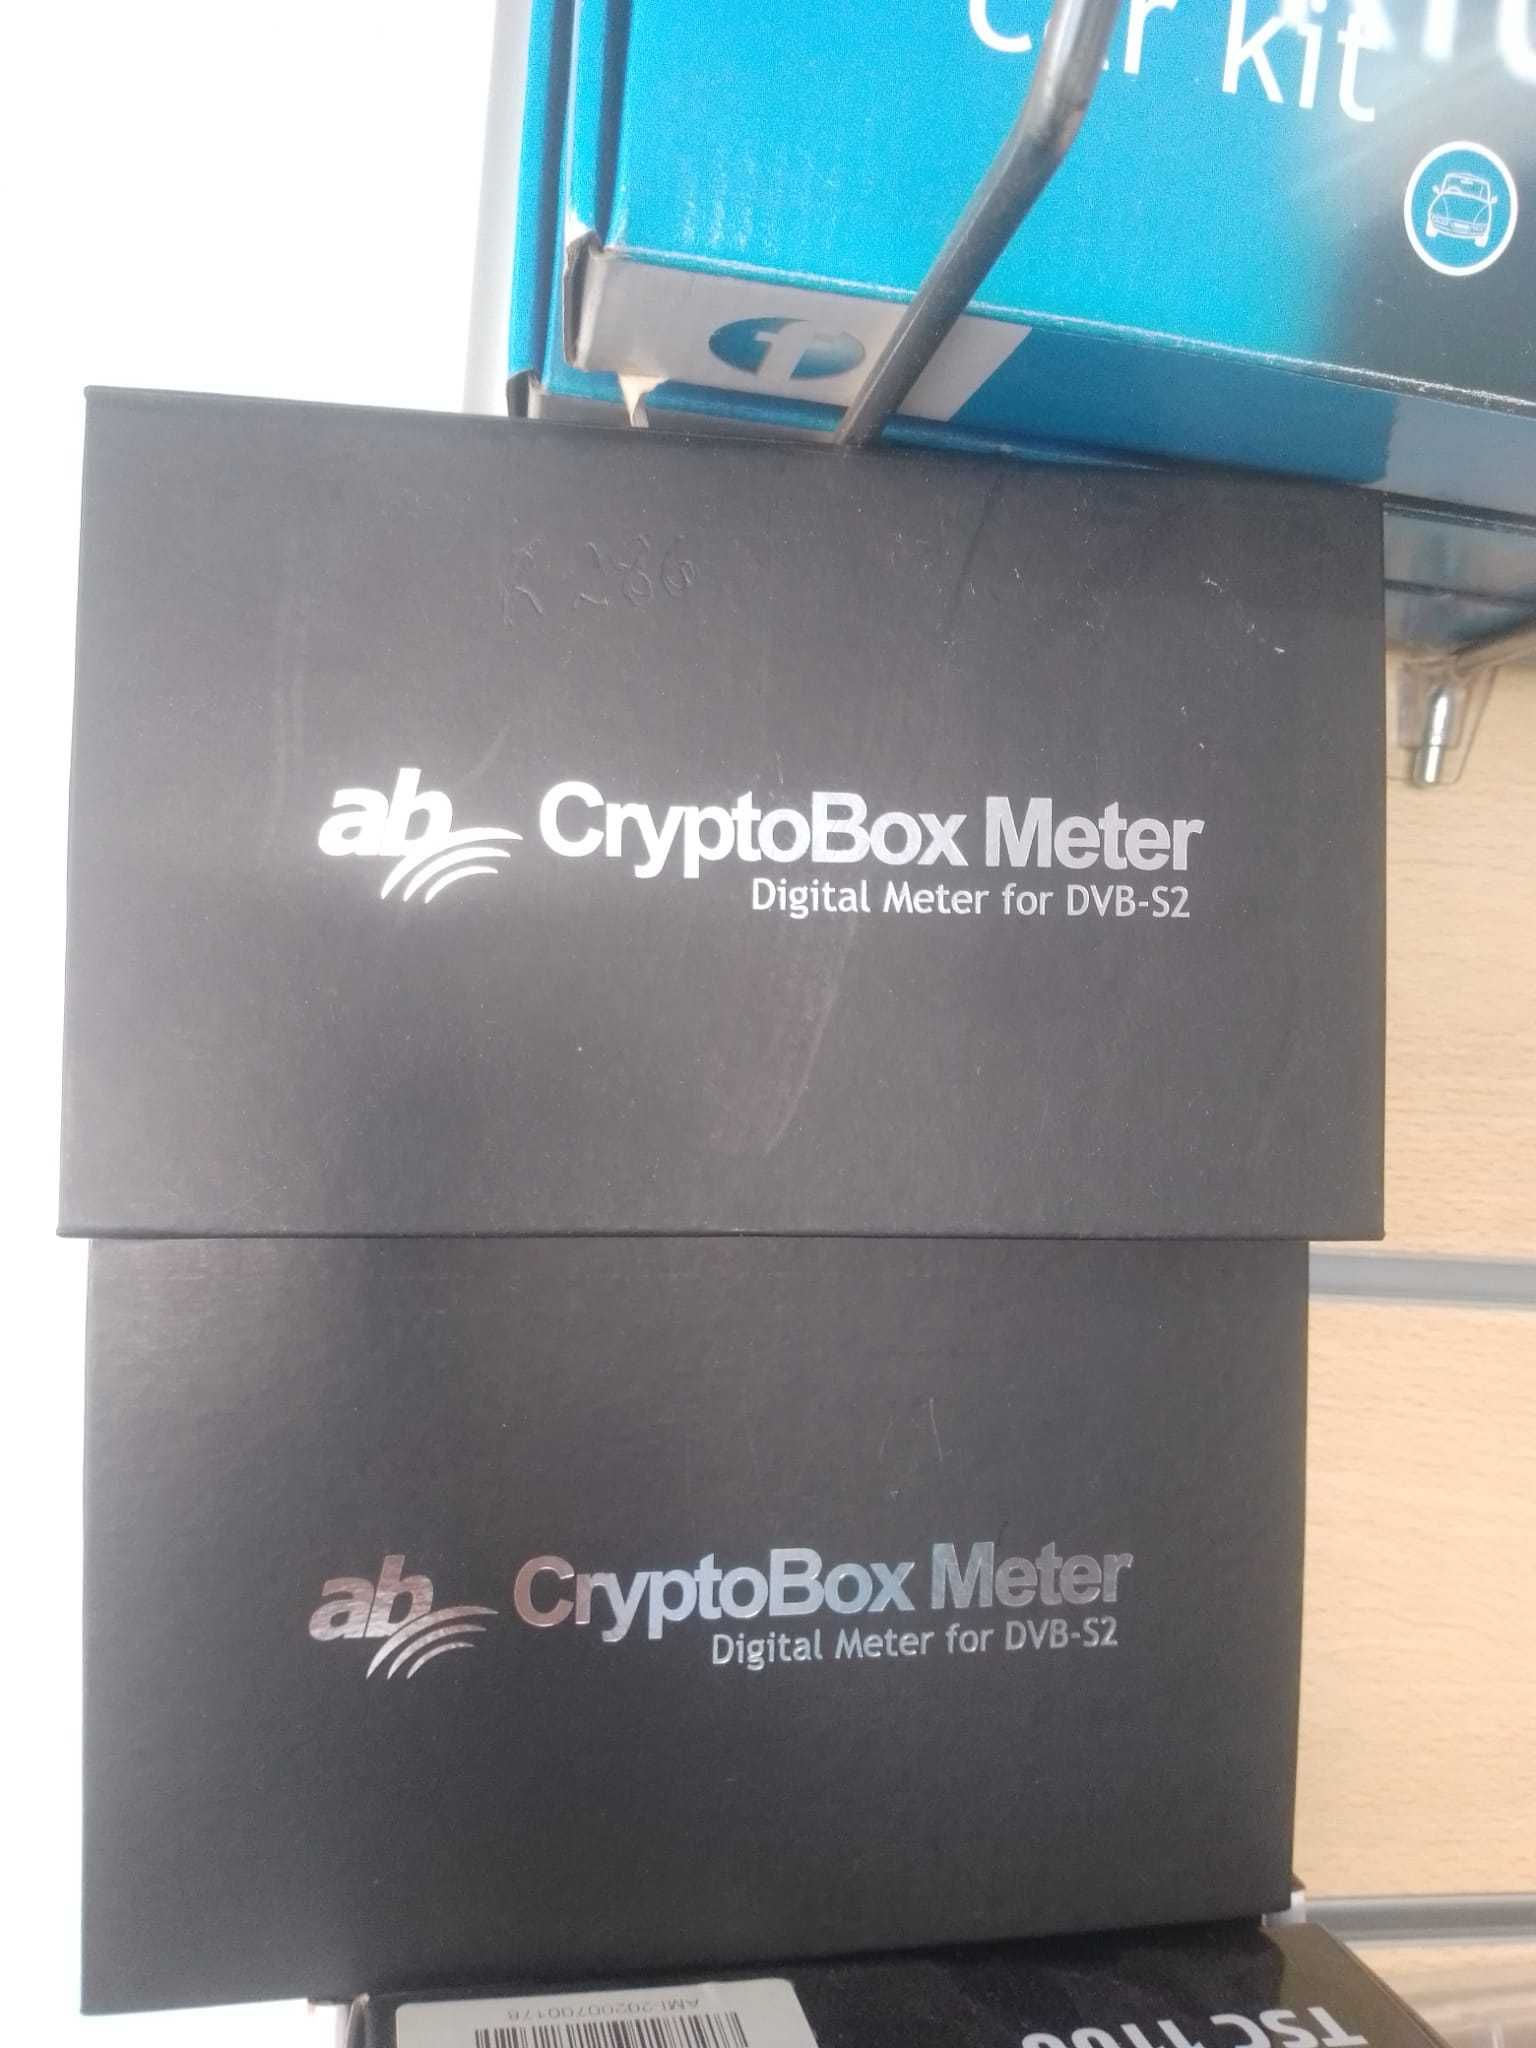 AB Cryptobox Meter